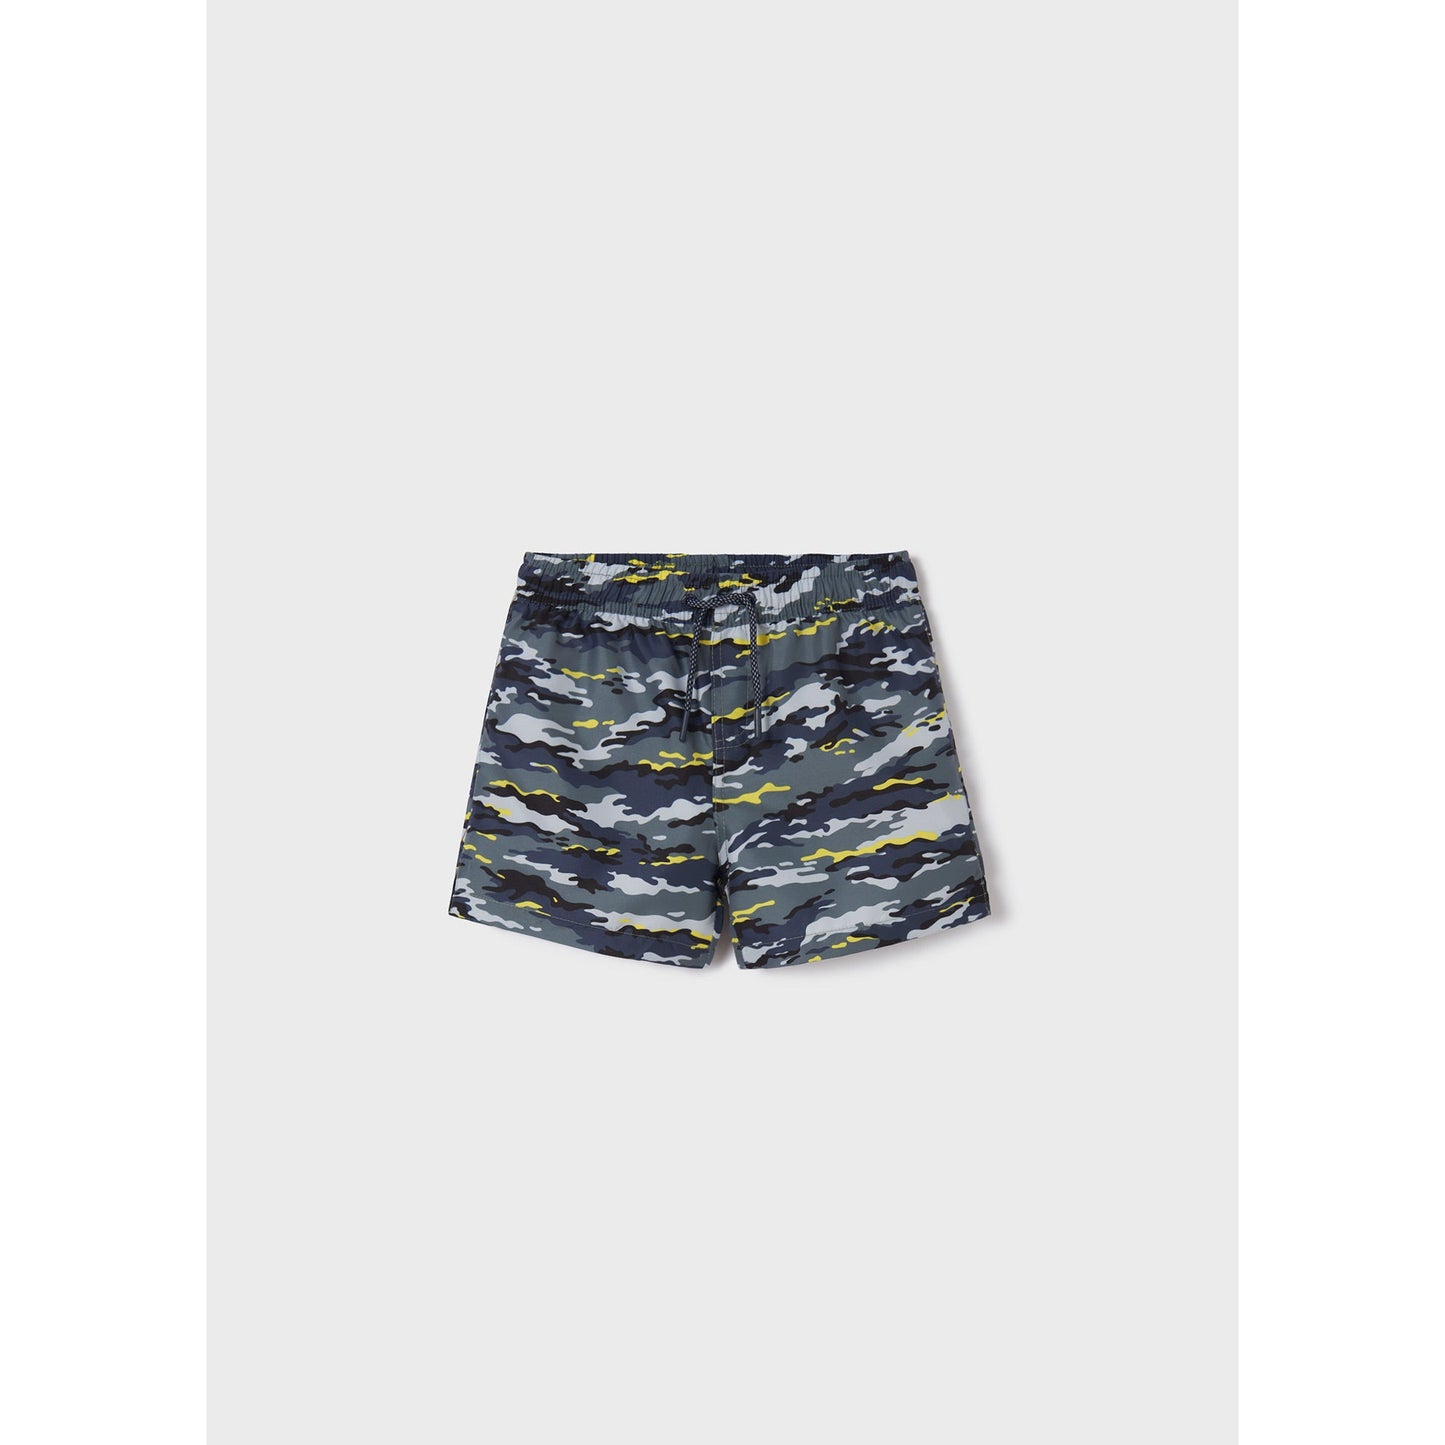 Nukutavake Printed Swim Shorts _Camo 6648-78